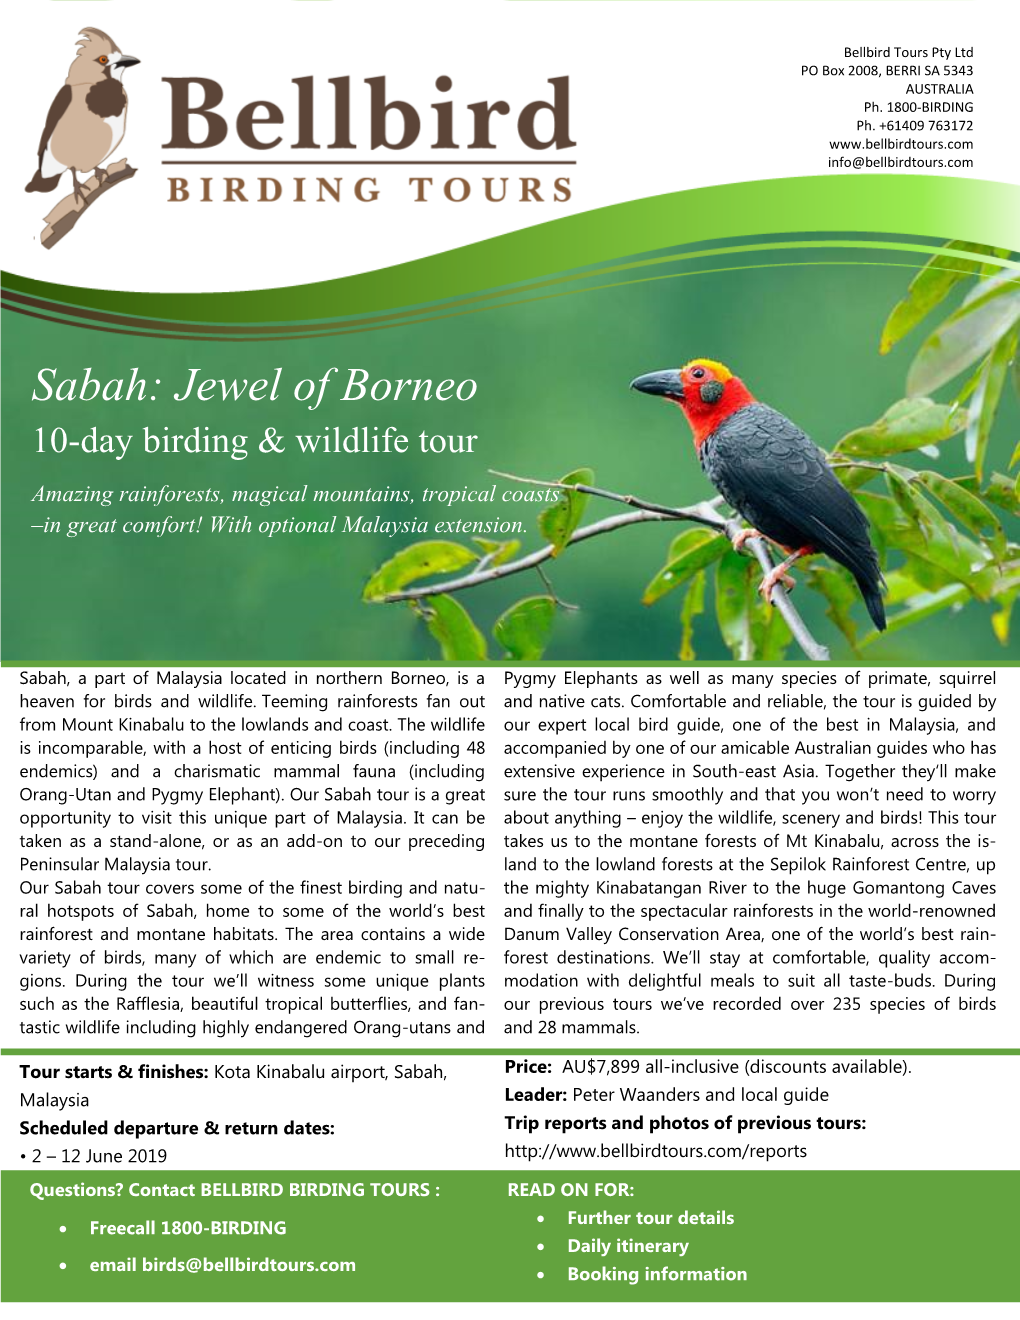 Sabah: Jewel of Borneo